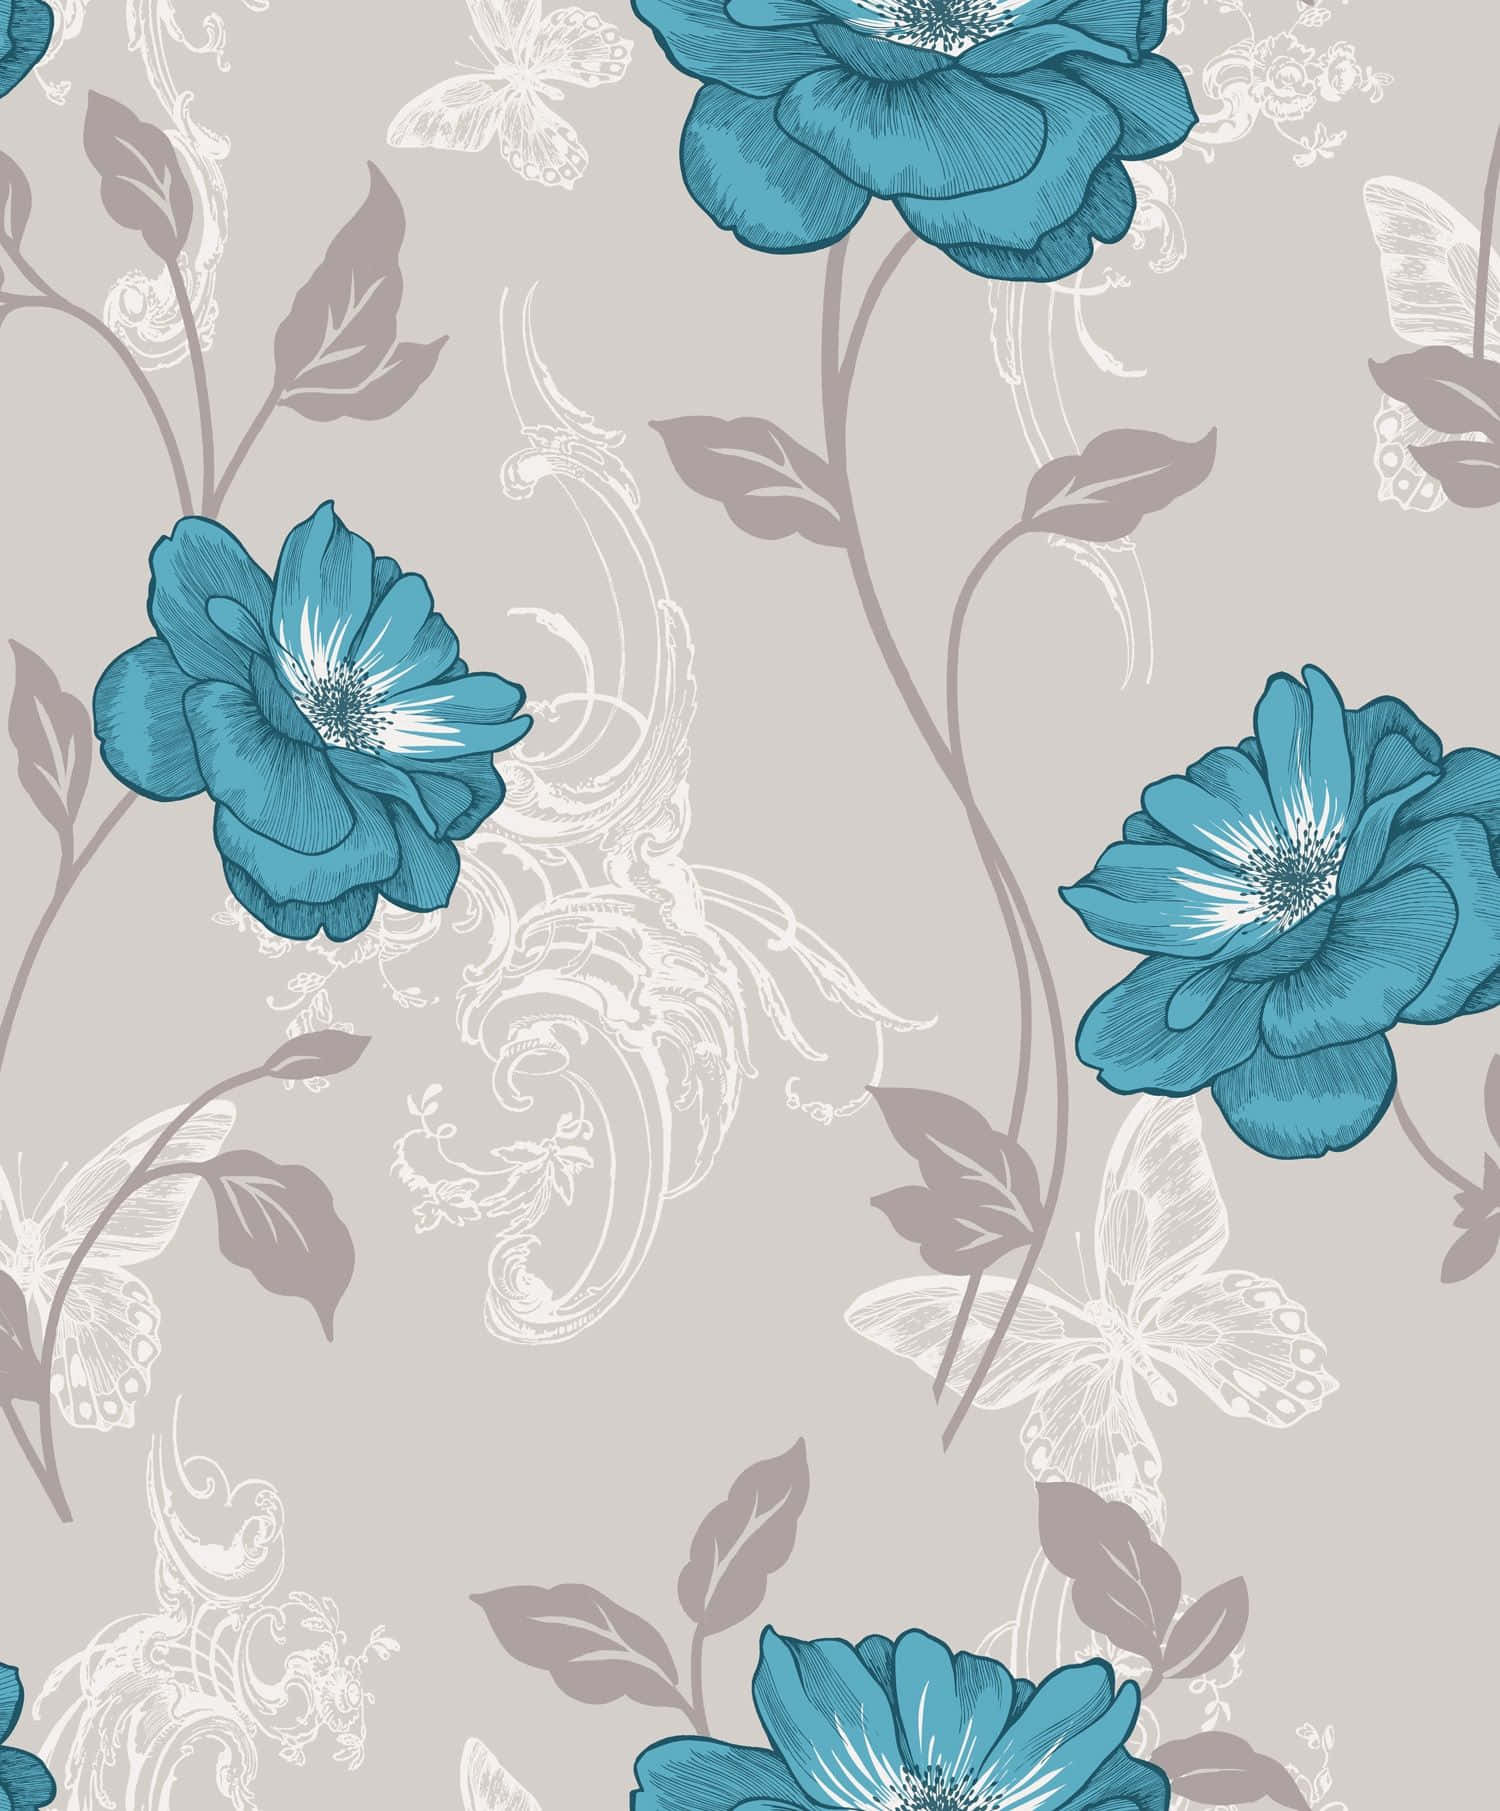 Enblå Blommig Bakgrundsbild Med Fjärilar. Wallpaper